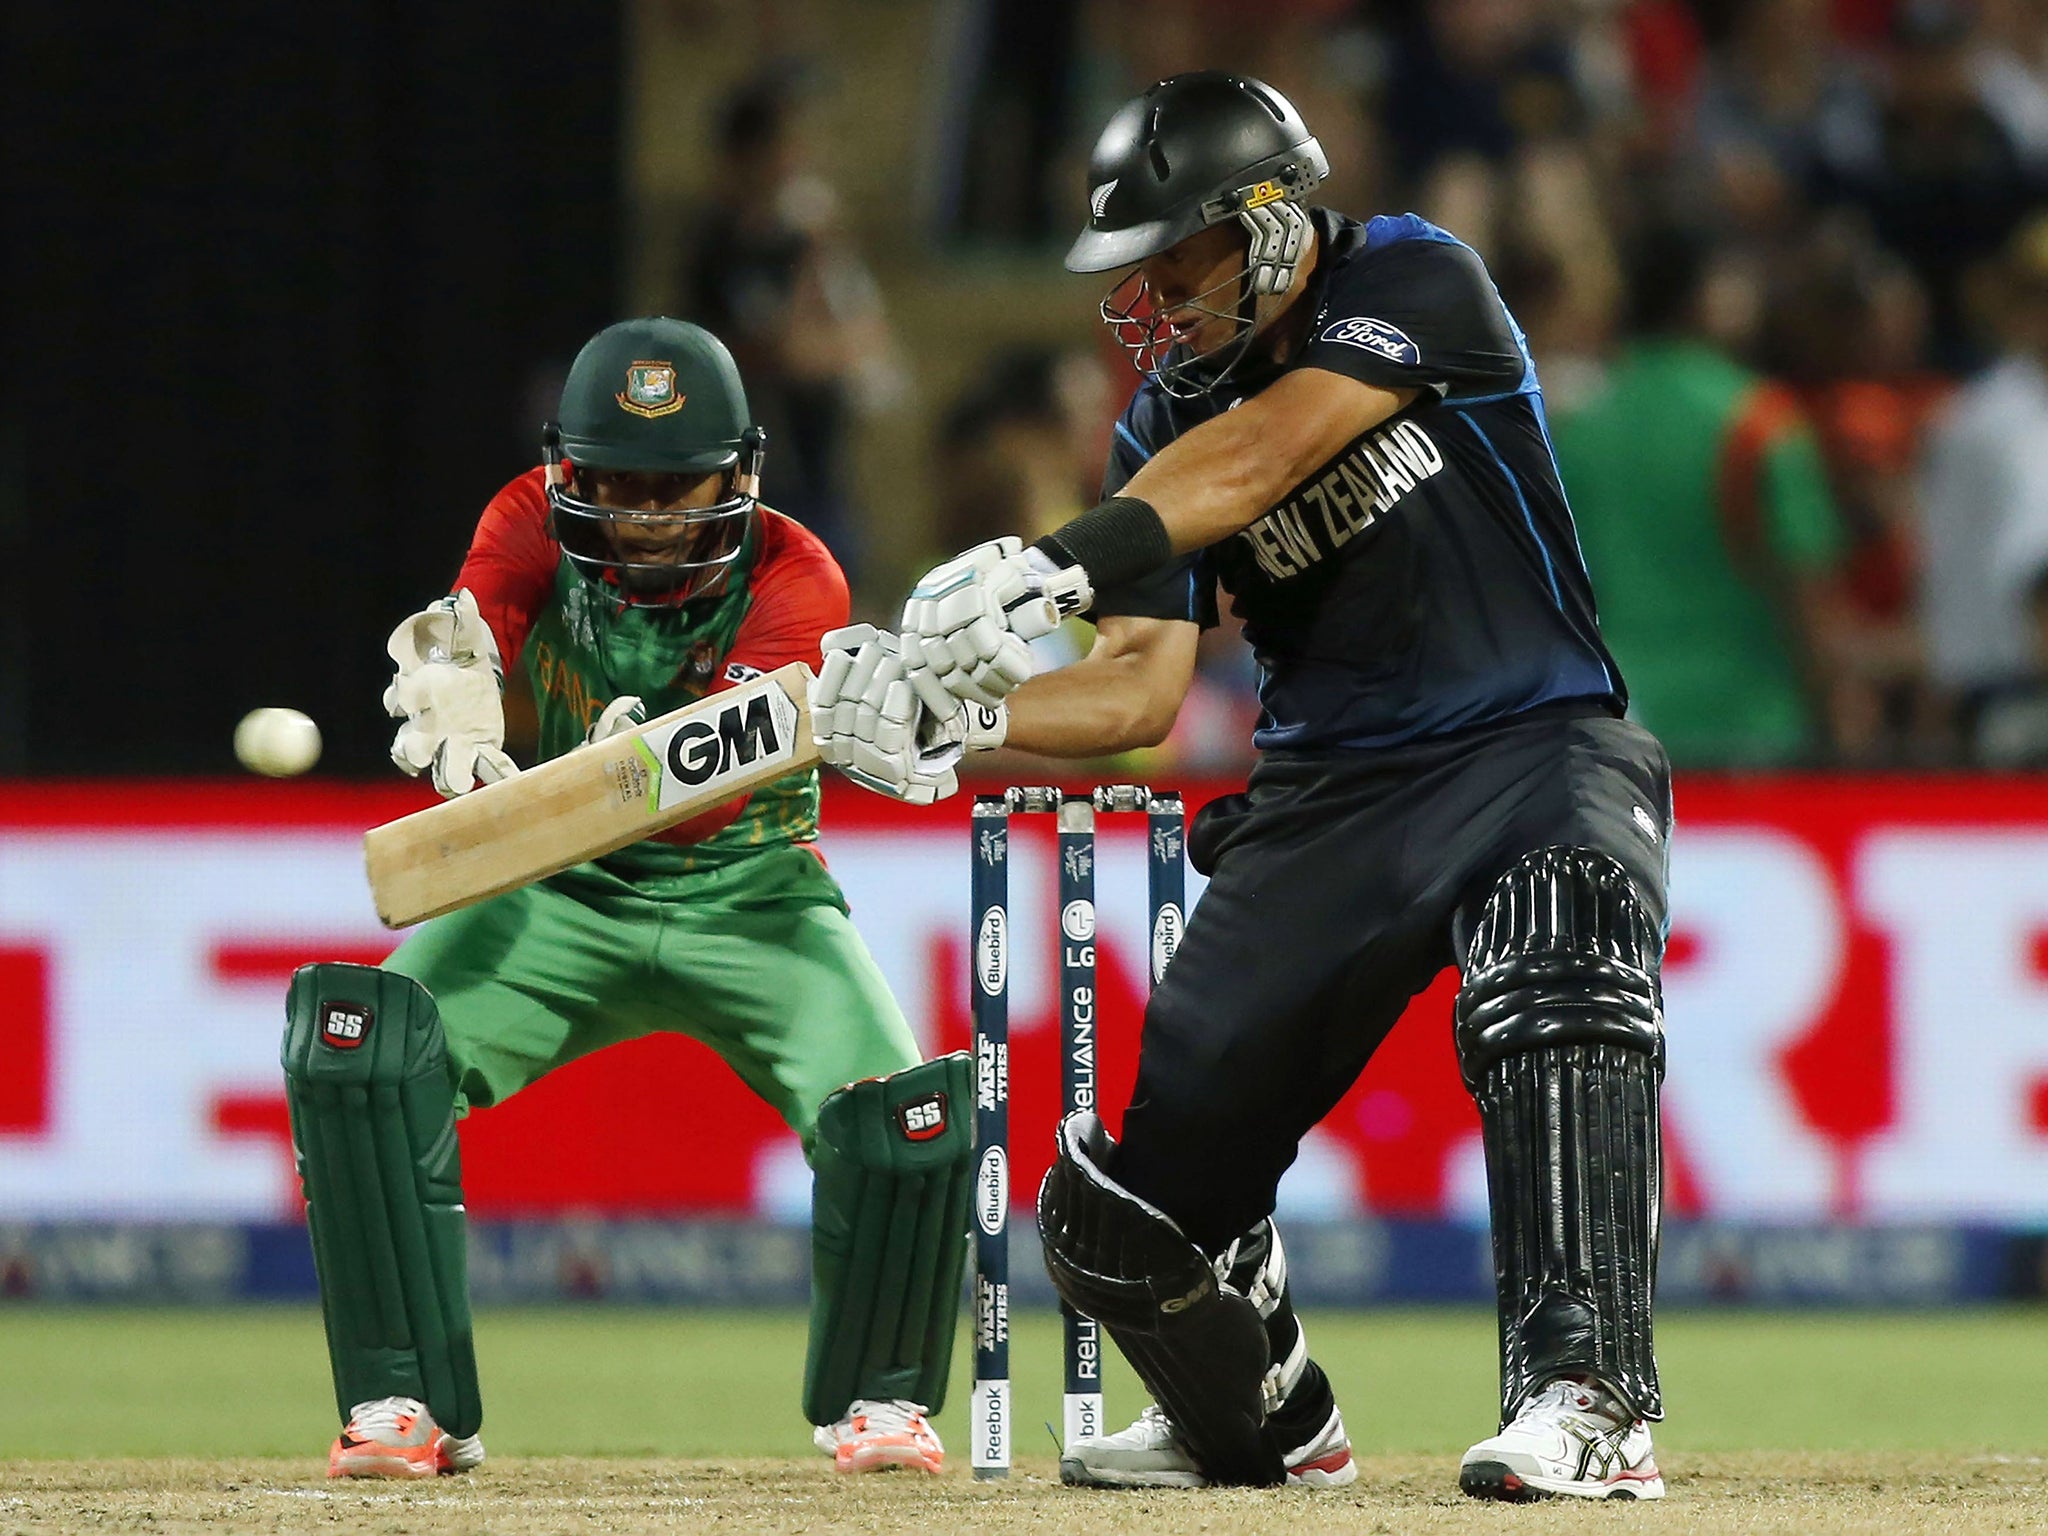 New Zealand batsman Ross Taylor struggled to find any
rhythm during his 97-ball 56 against Bangladesh last week